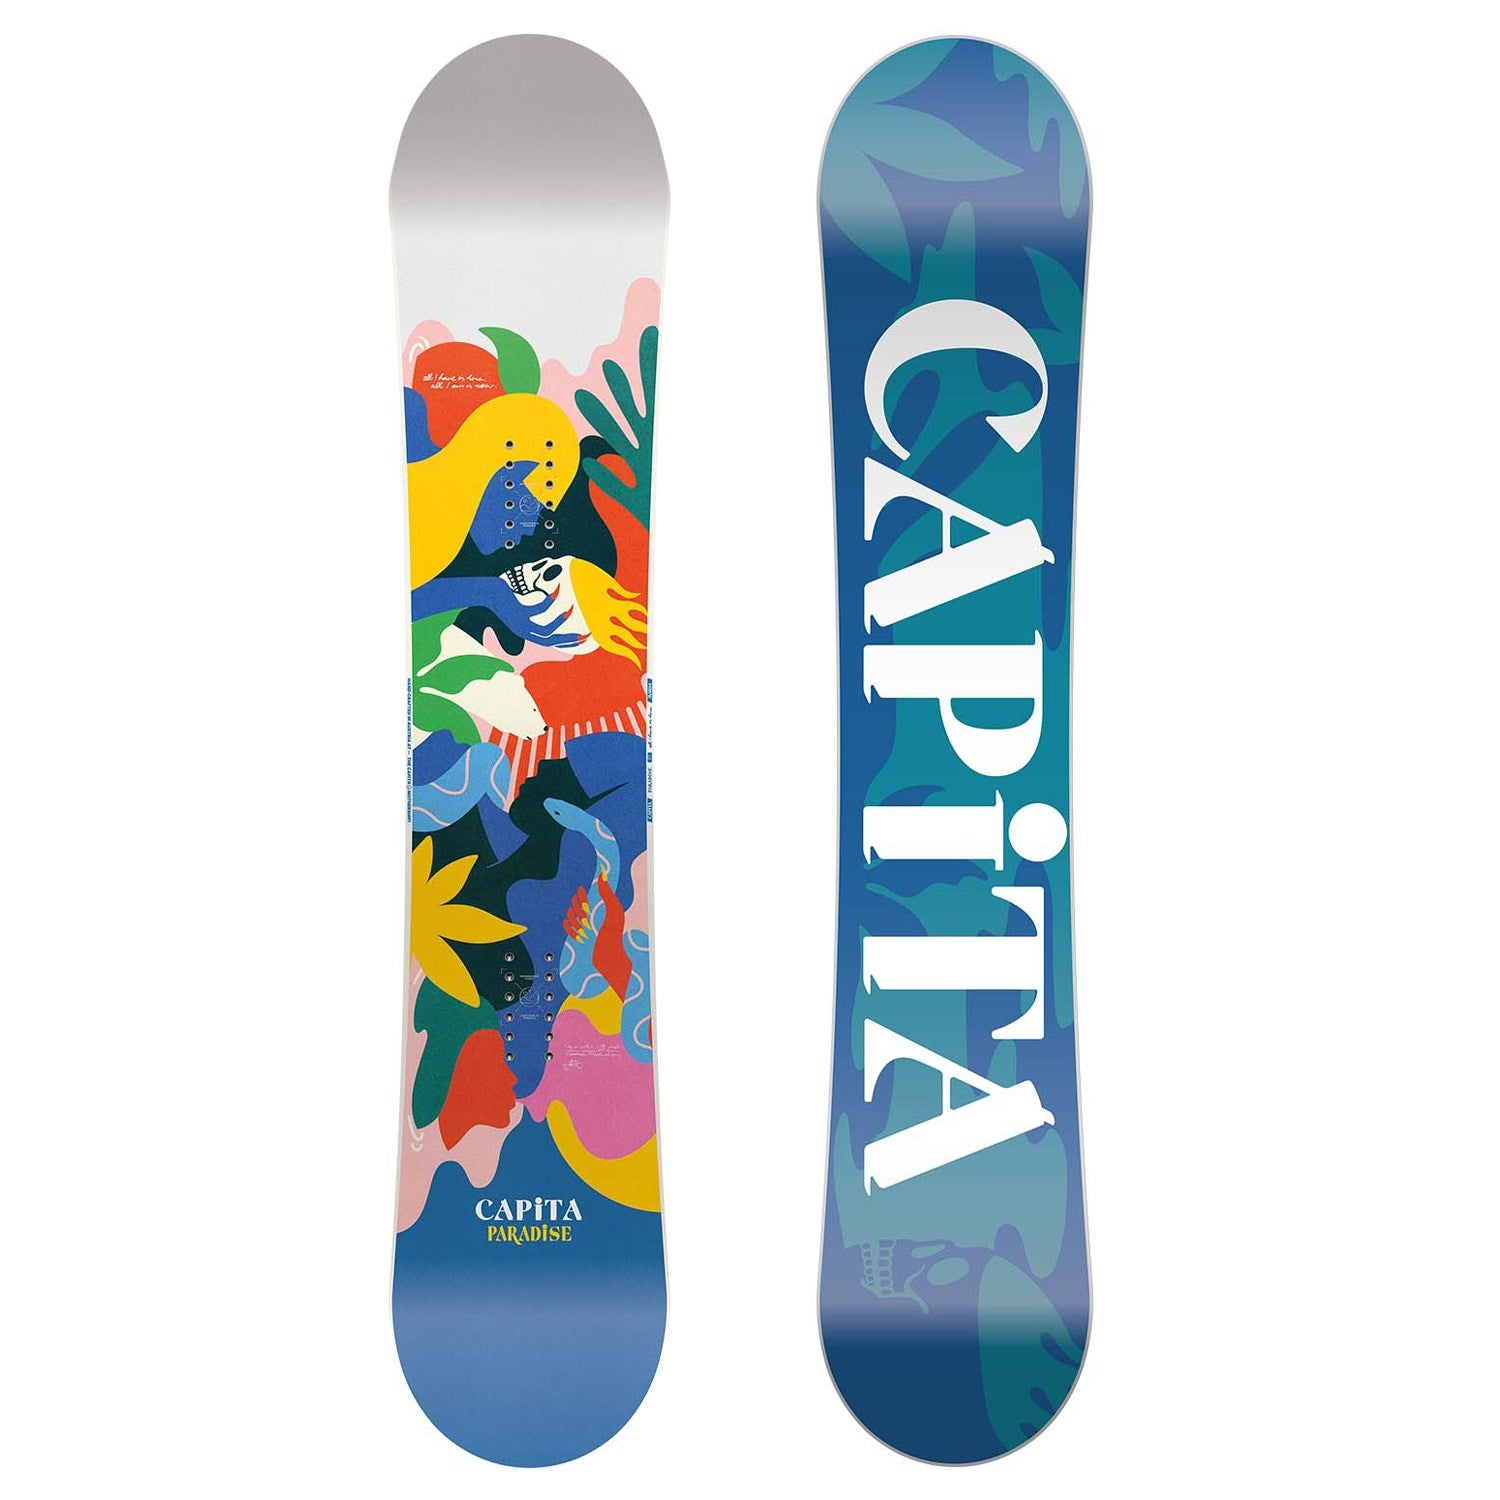 Kelder rechtop de wind is sterk Capita Paradise Snowboard 2023 Women's Snowboard For Sale